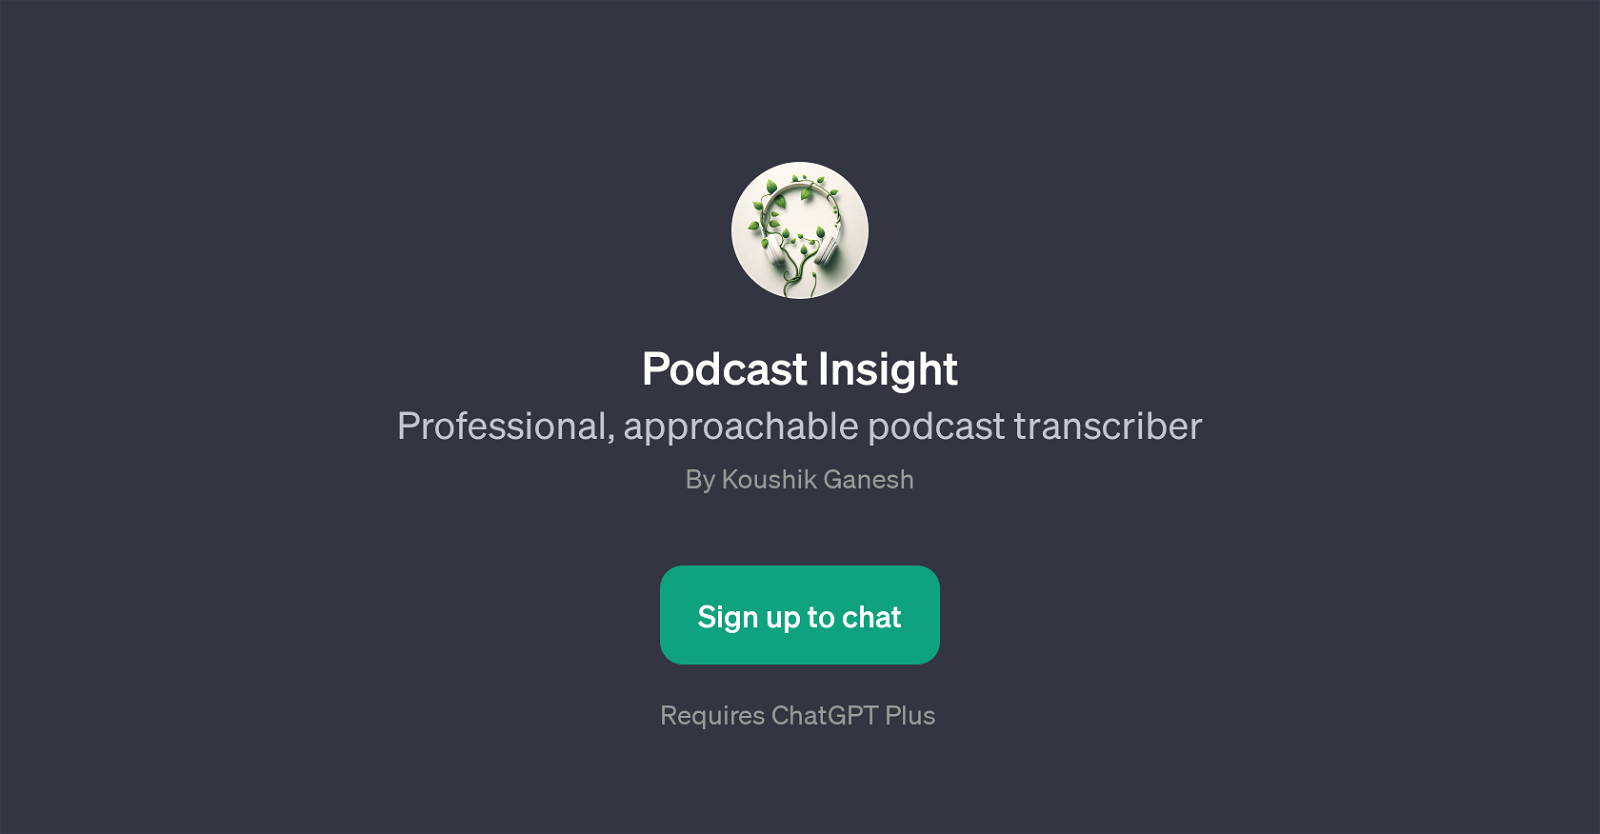 Podcast Insight website